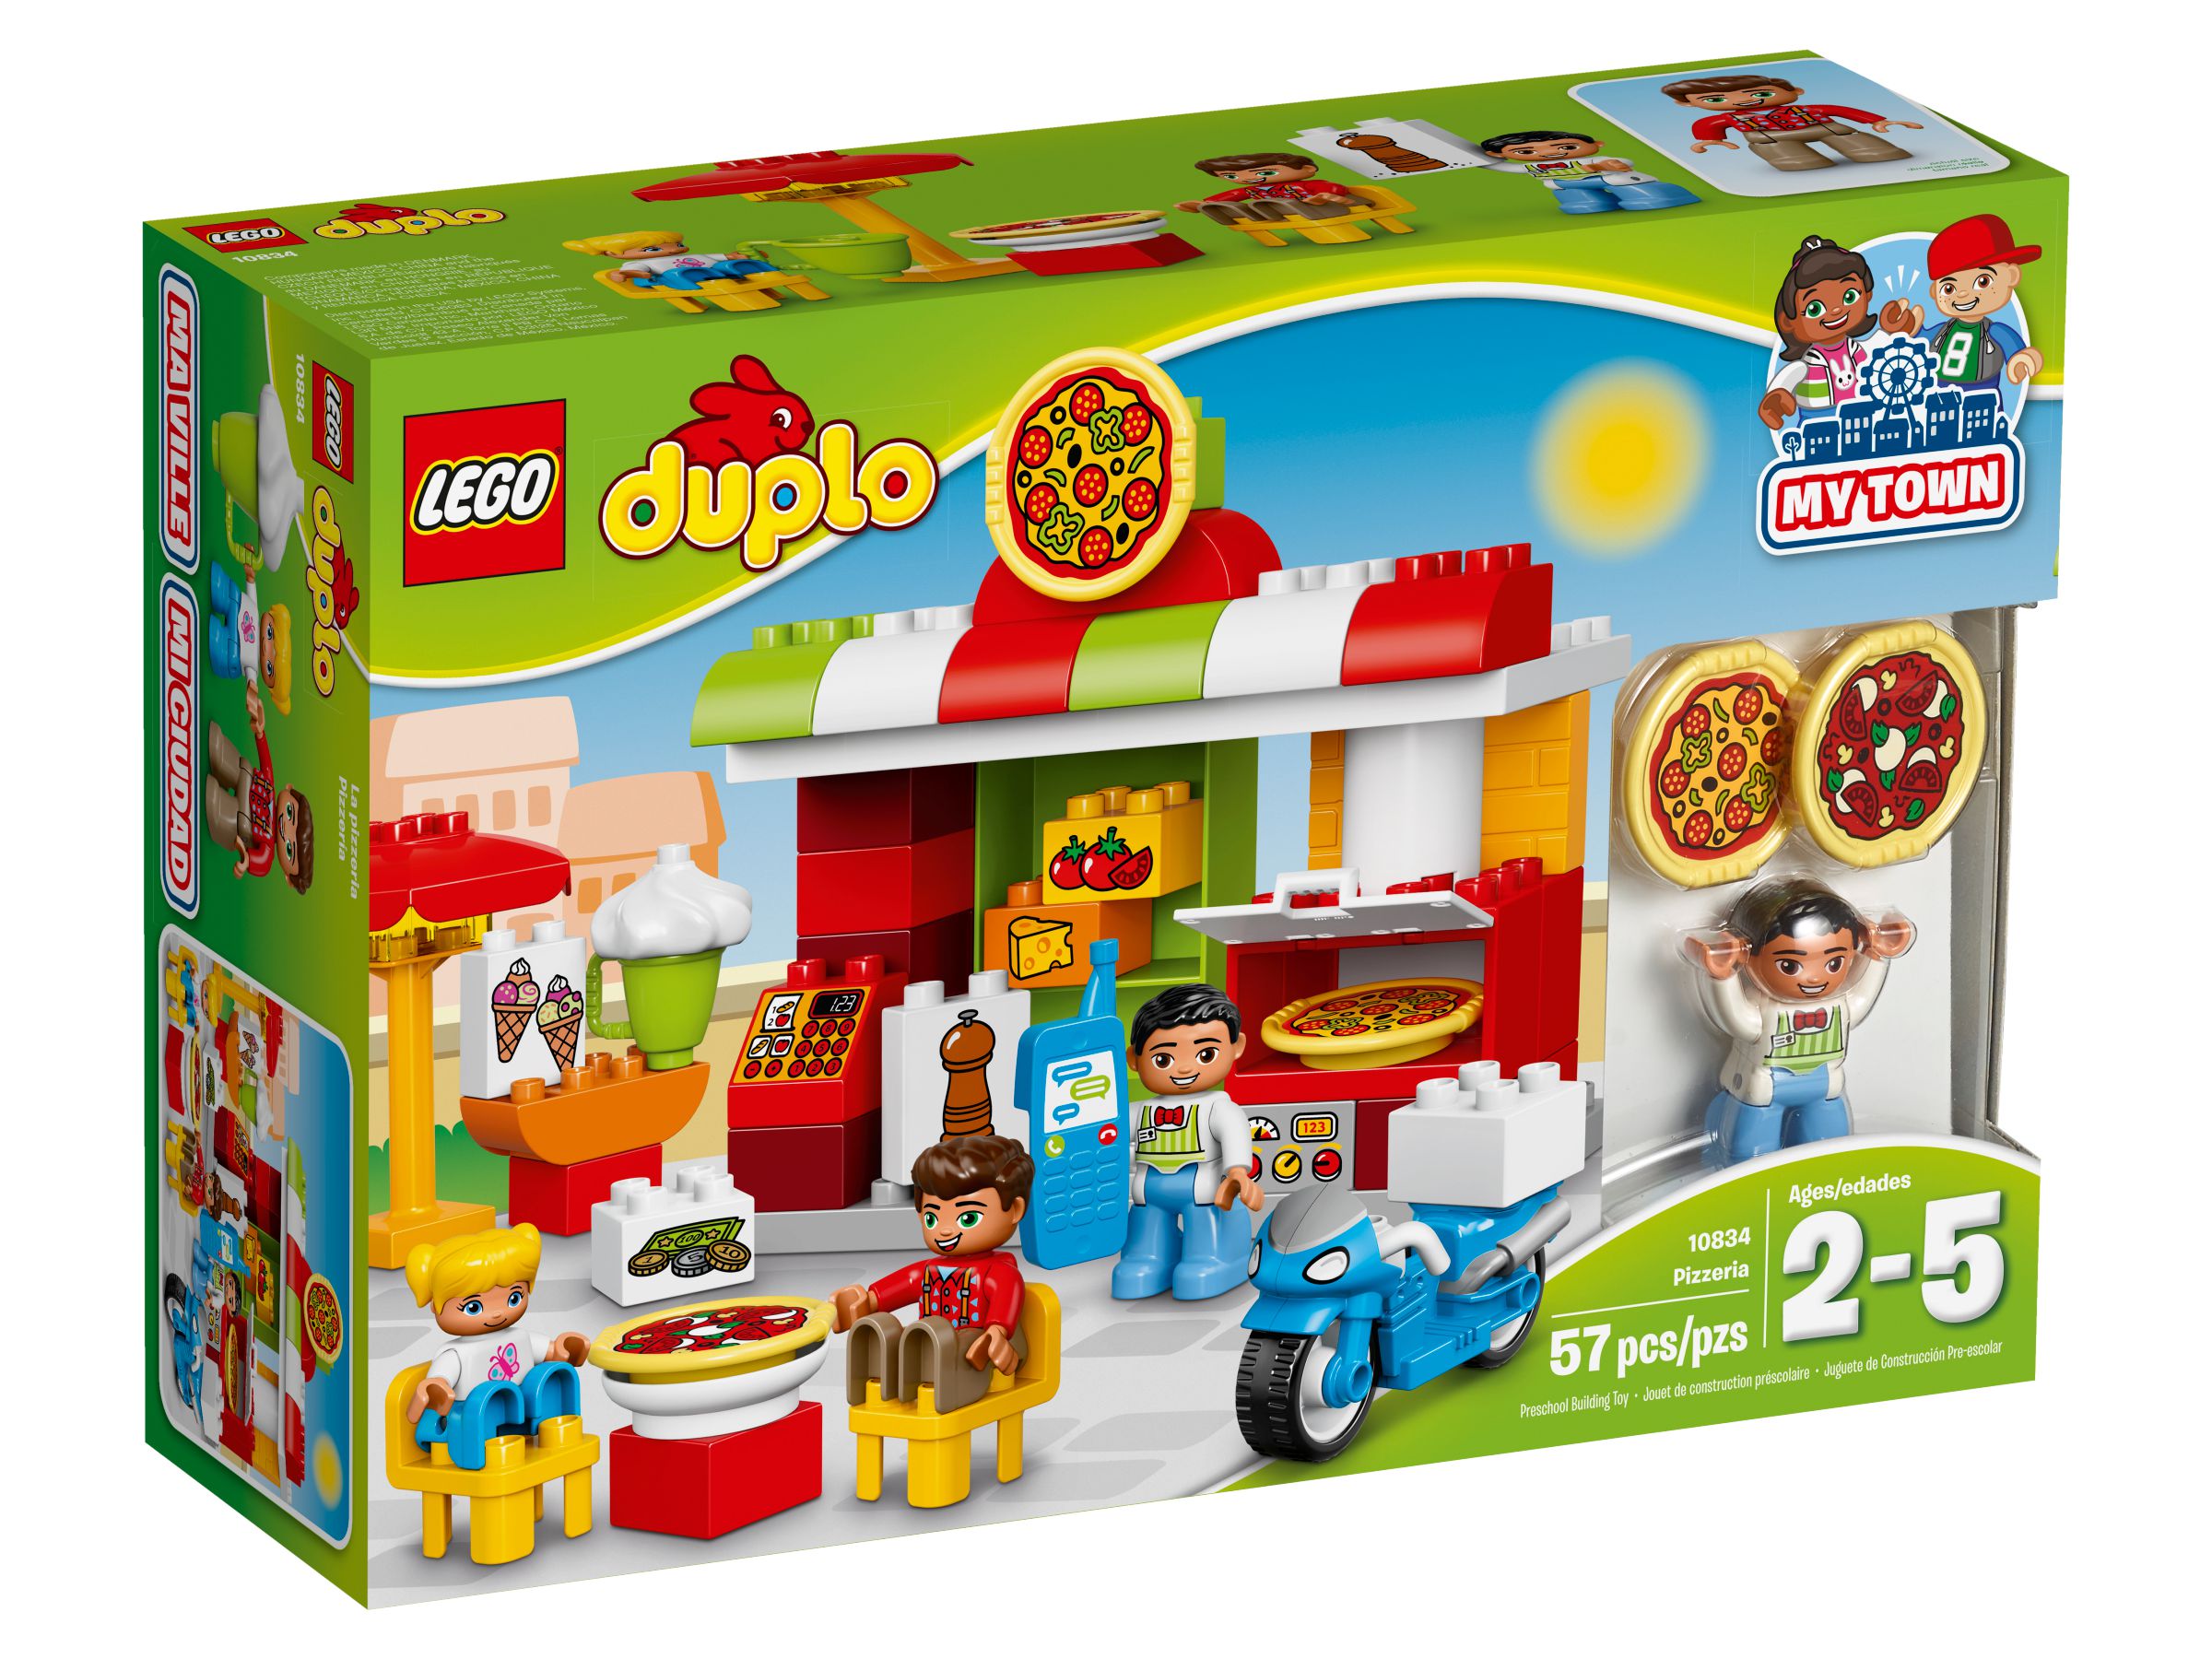 LEGO Duplo 10834 Pizzeria LEGO_10834_alt1.jpg